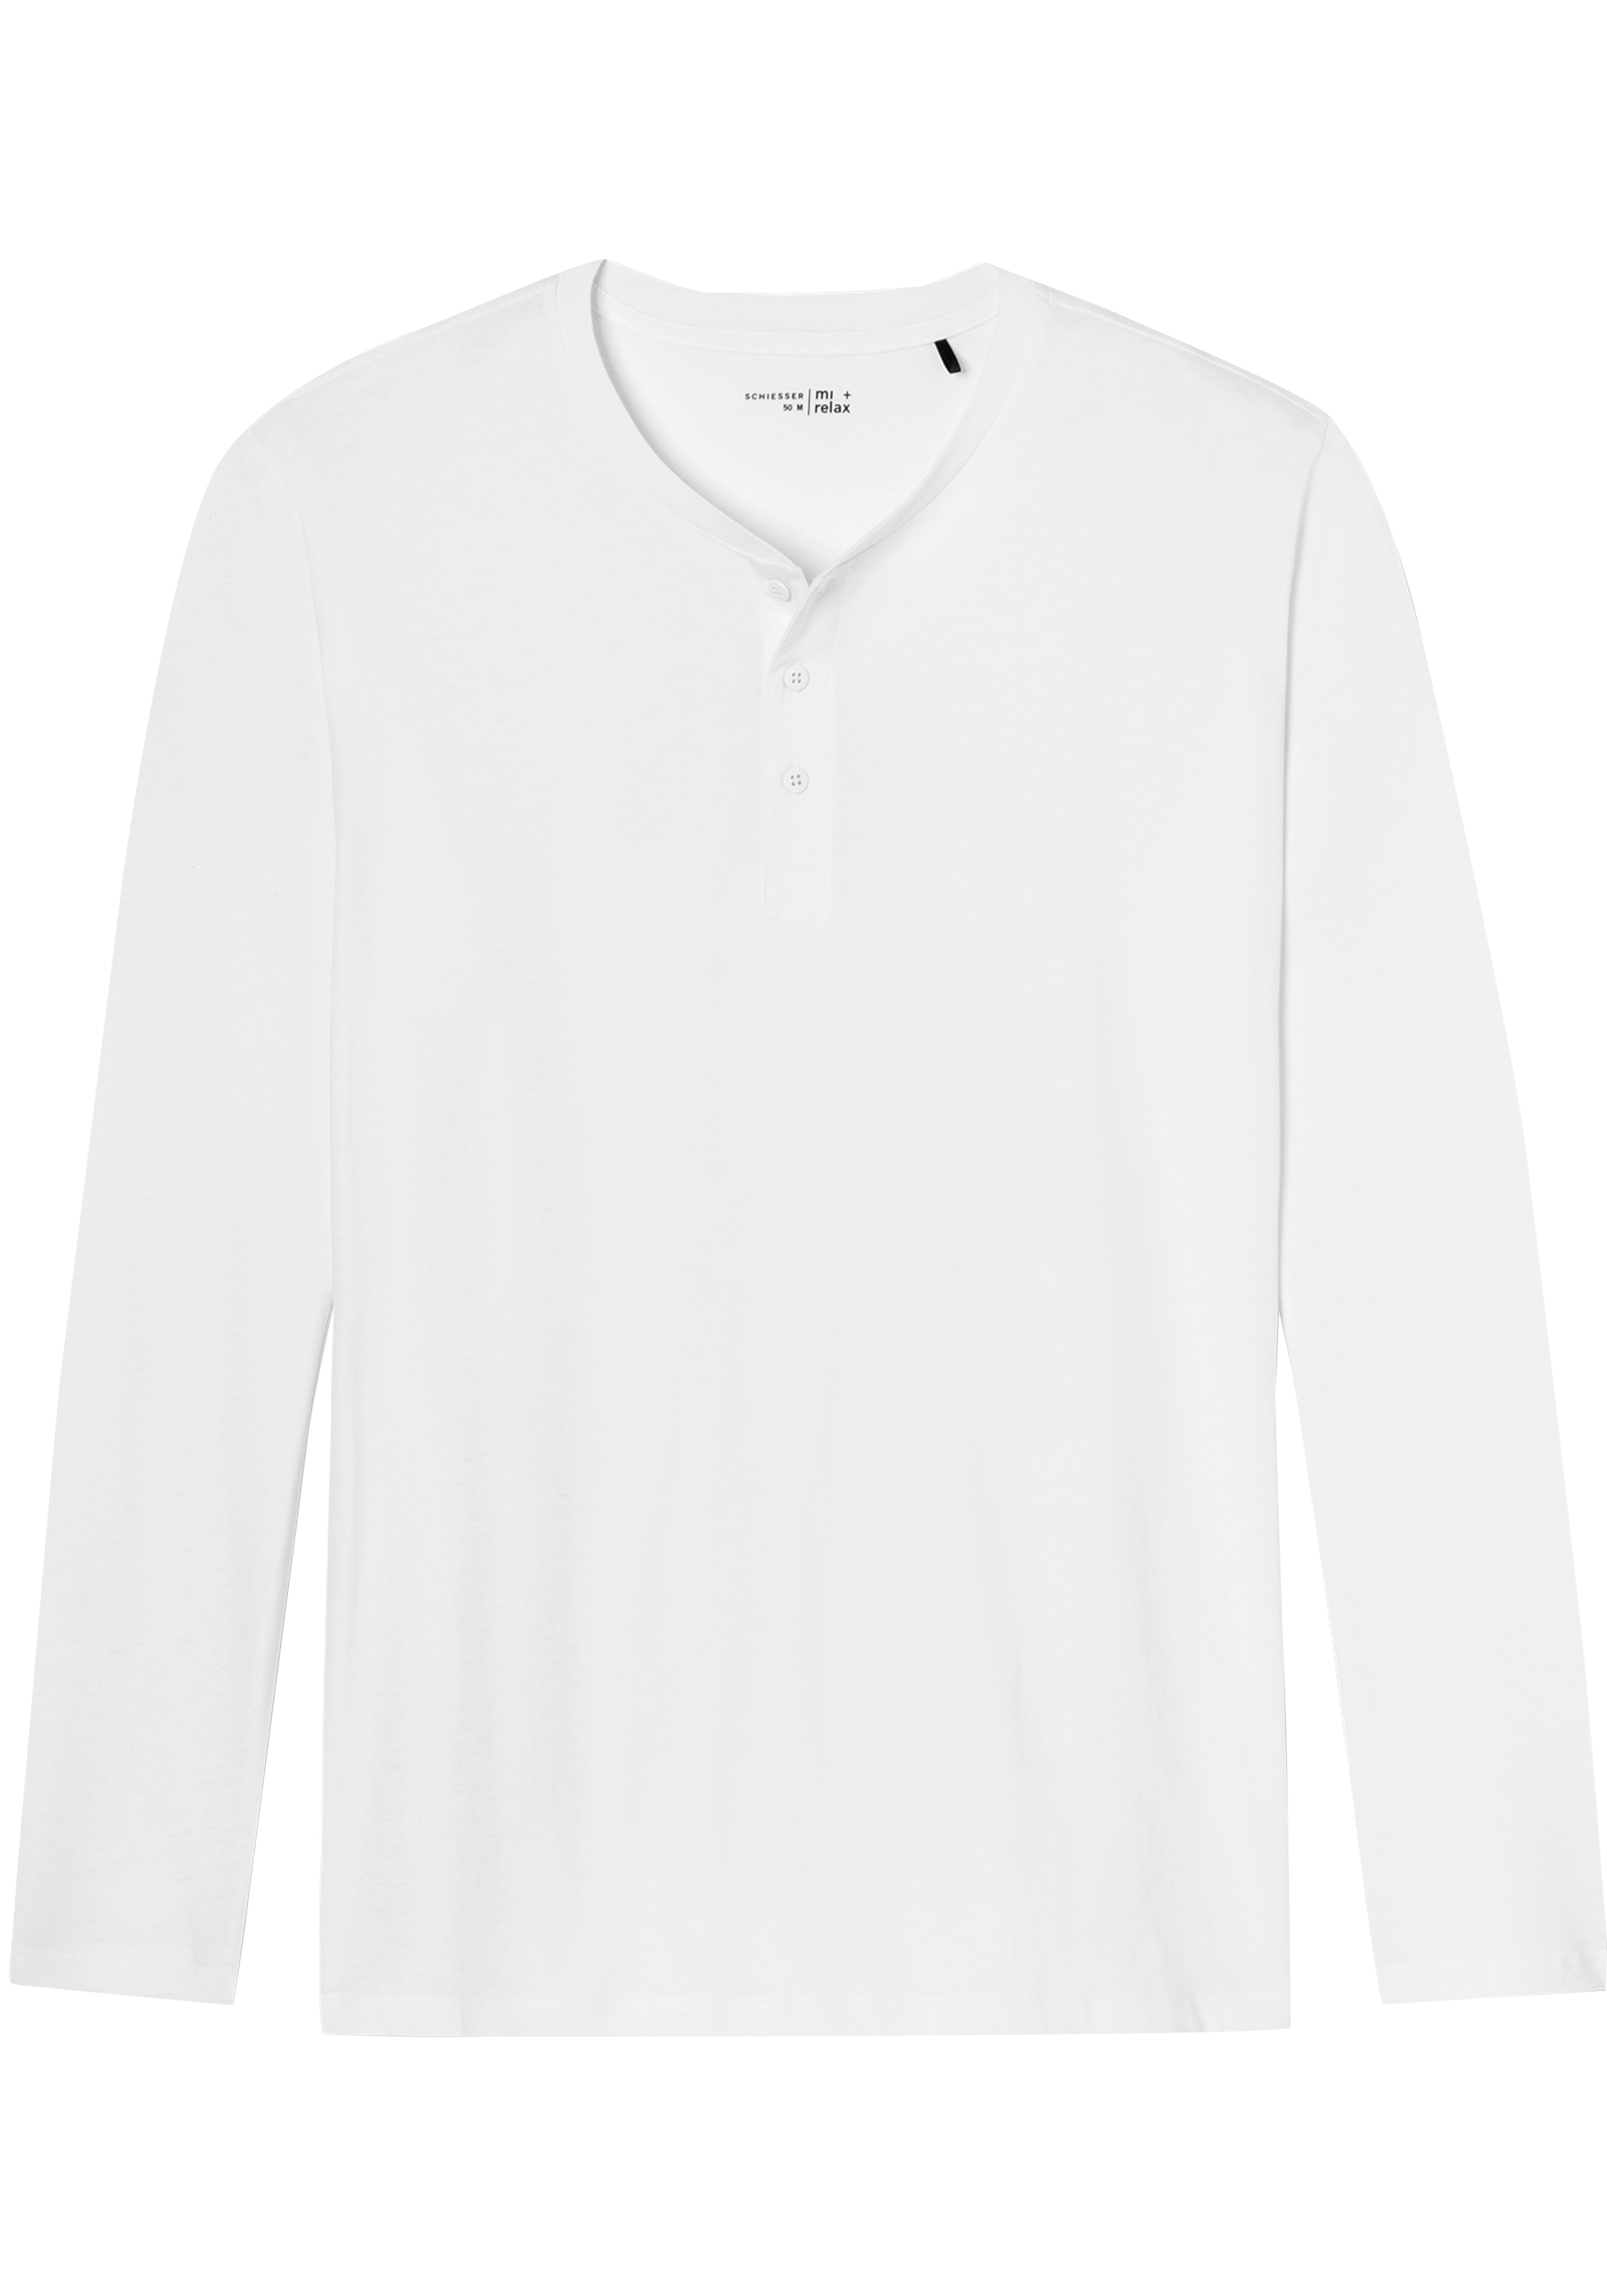 SCHIESSER Mix+Relax T-shirt, lange mouw O-hals met knoopjes, wit